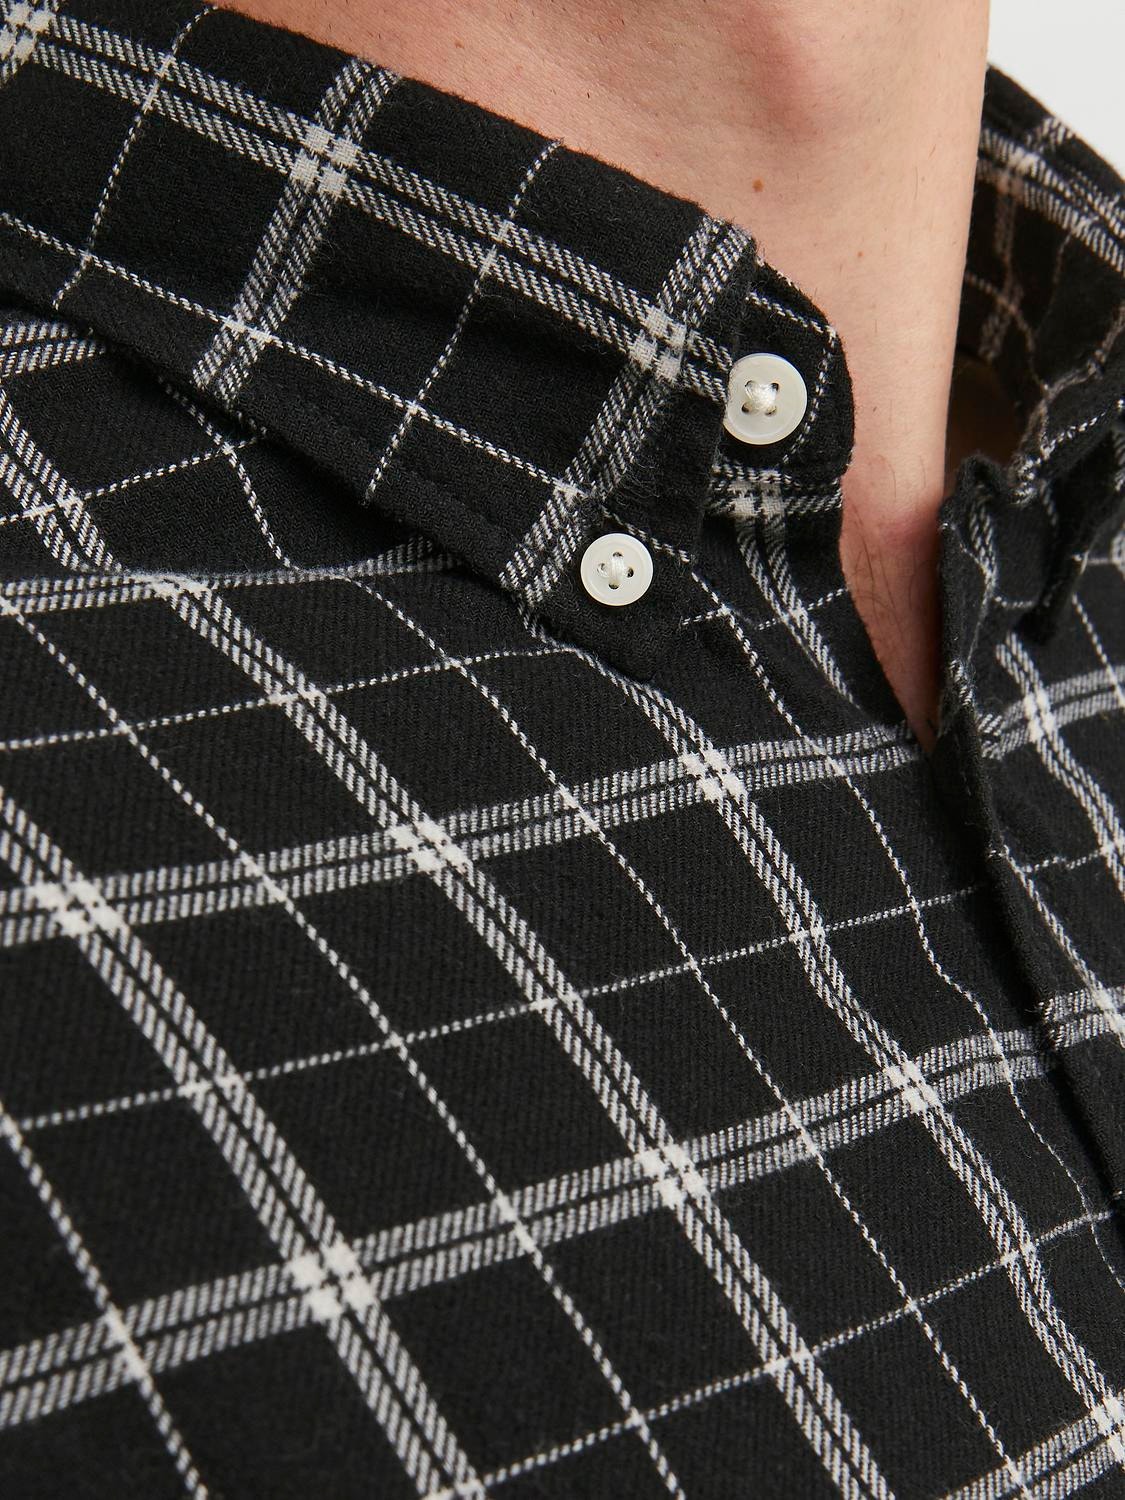 Jack & Jones Plus Size Wide Fit Overshirt -Black - 12247527